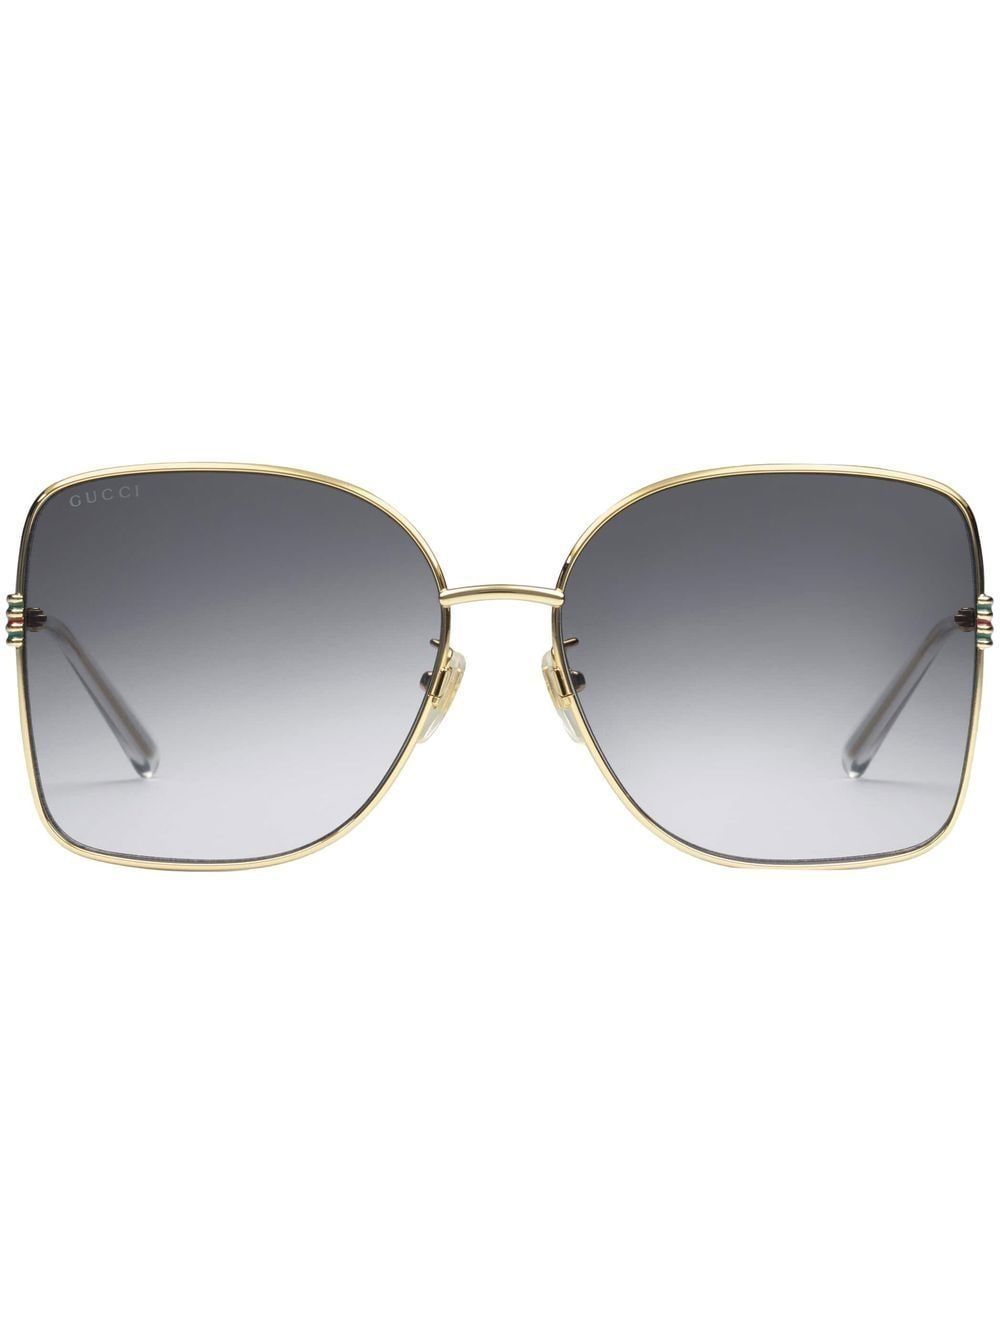 Sunglasses | Tessabit Stores (Global)